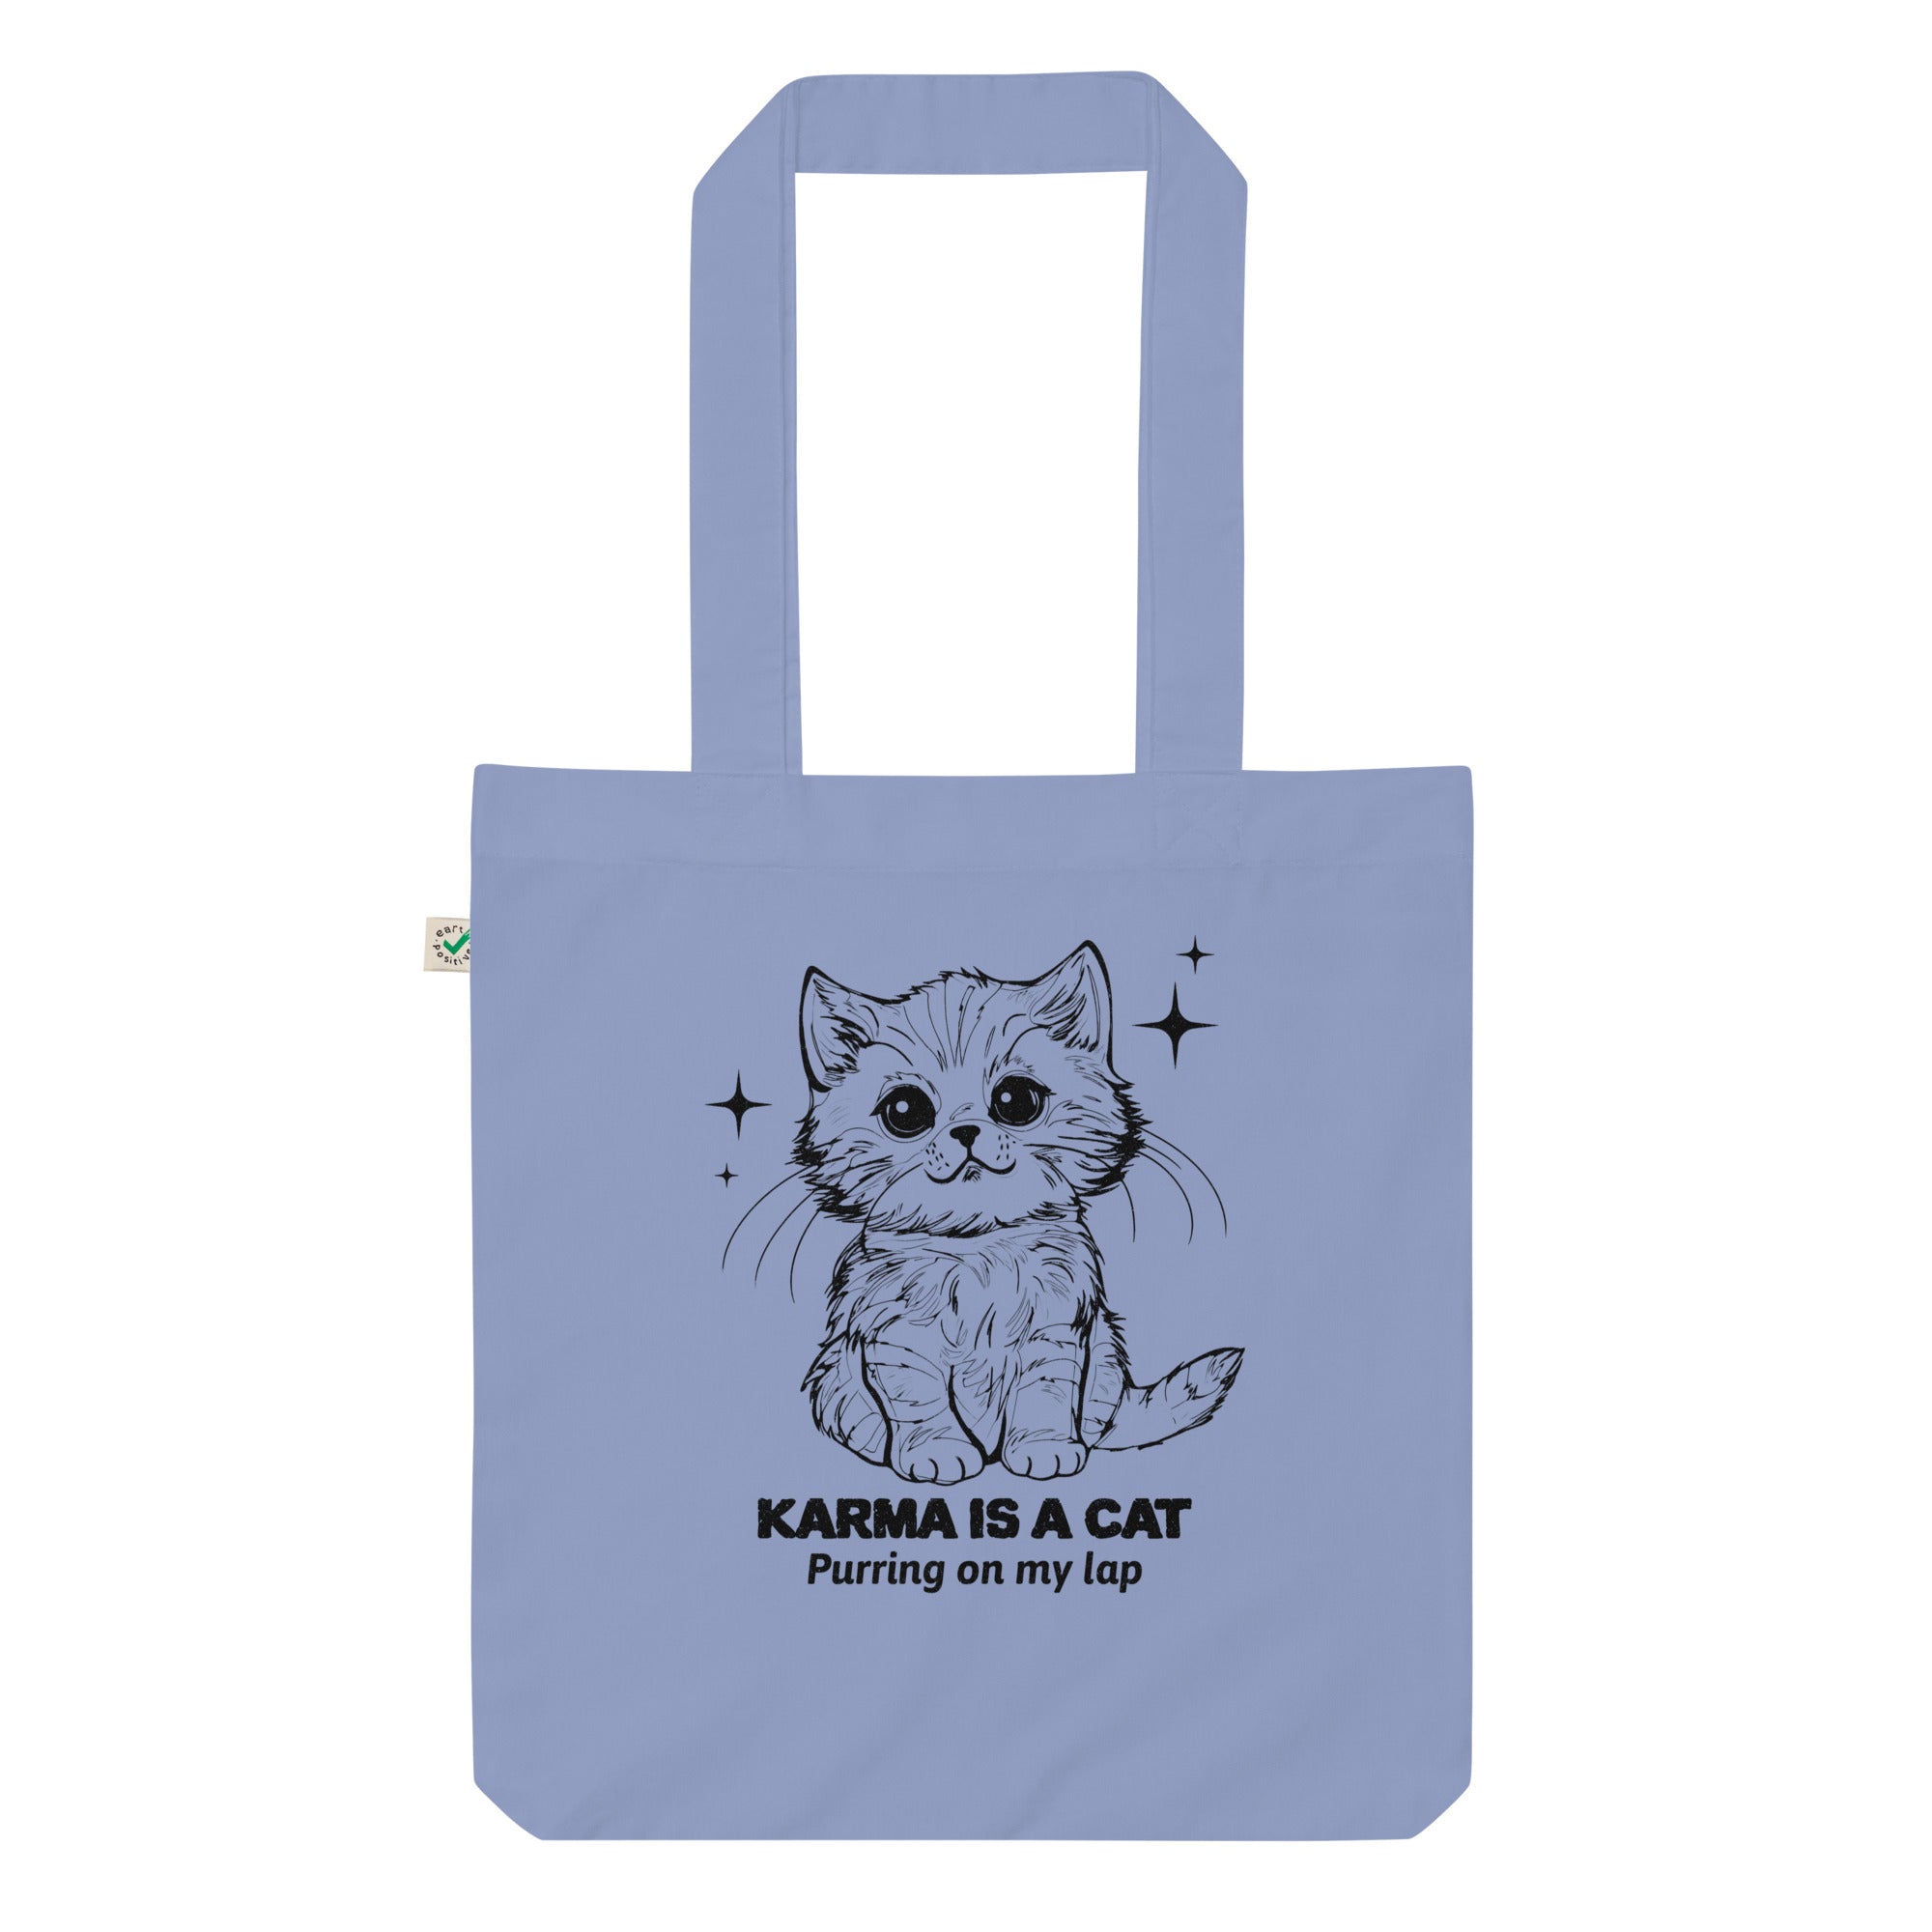 Karma Is A Cat Vintage Illustration - Organic fashion tote bag